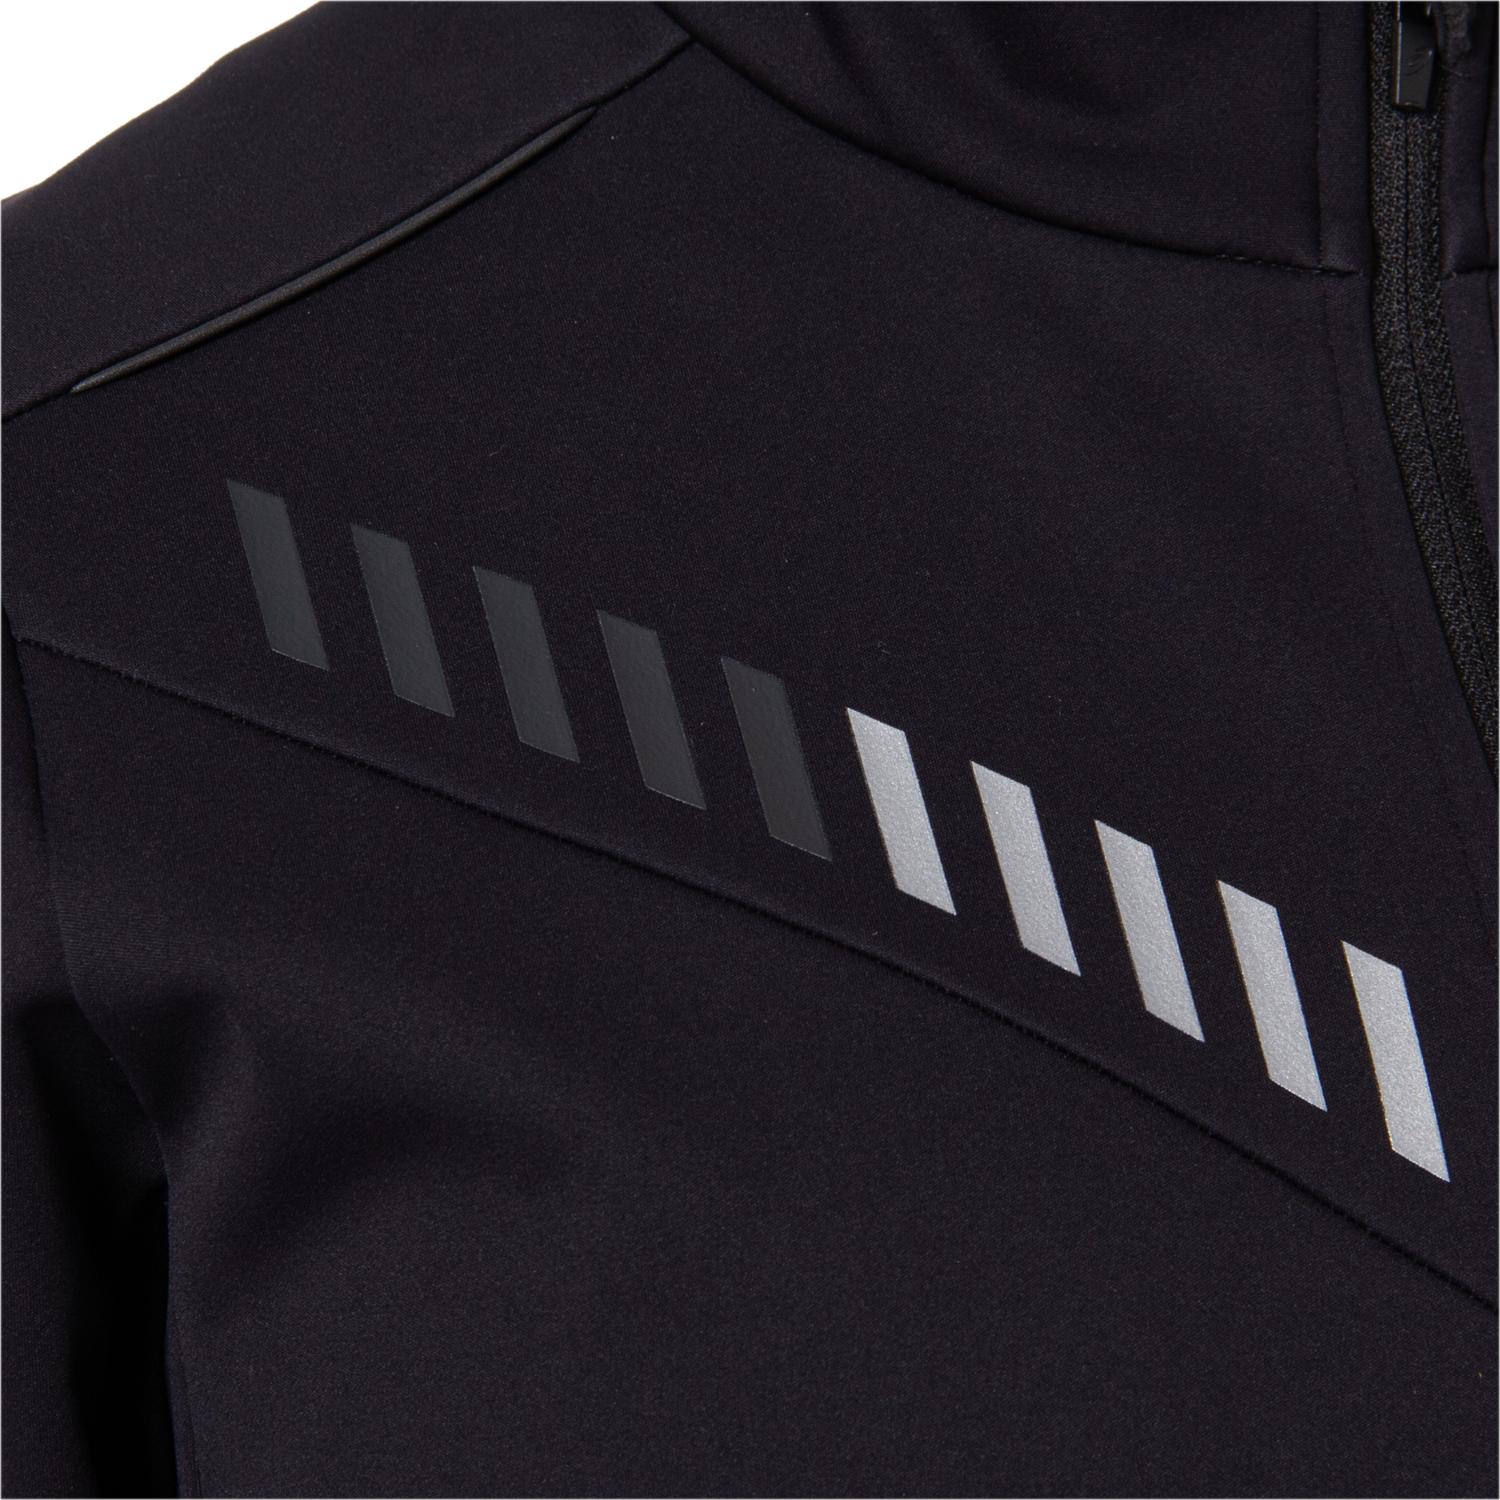 Куртка беговая Asics 2020-21 Lite-show winter jacket Performance Black/Graphite Grey